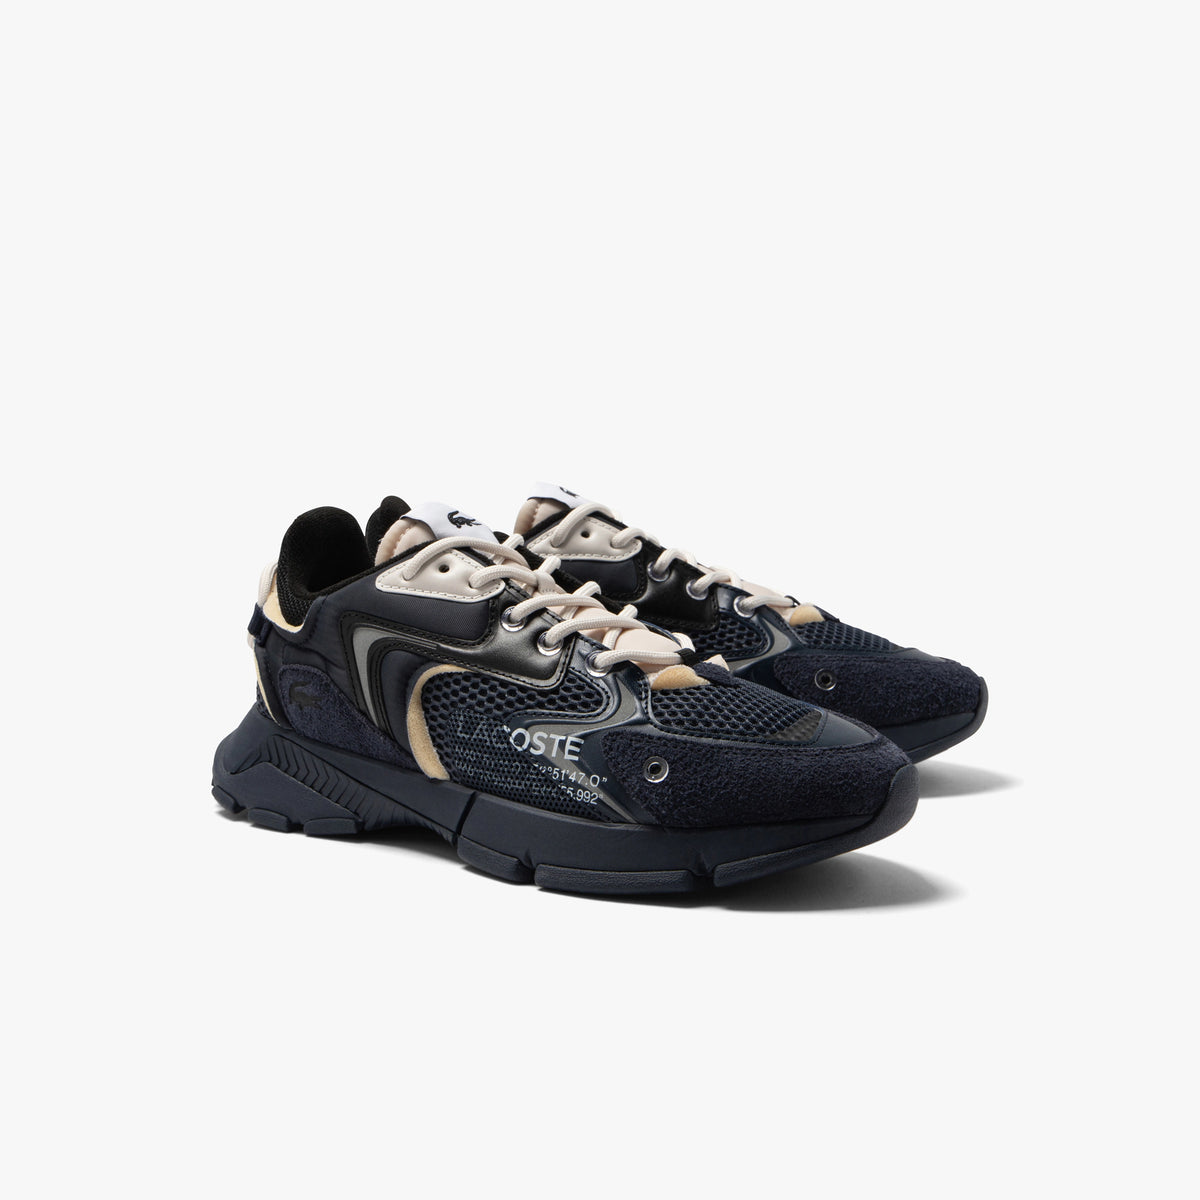 Lacoste - L003 Neo Textile Sneakers - Black/Navy